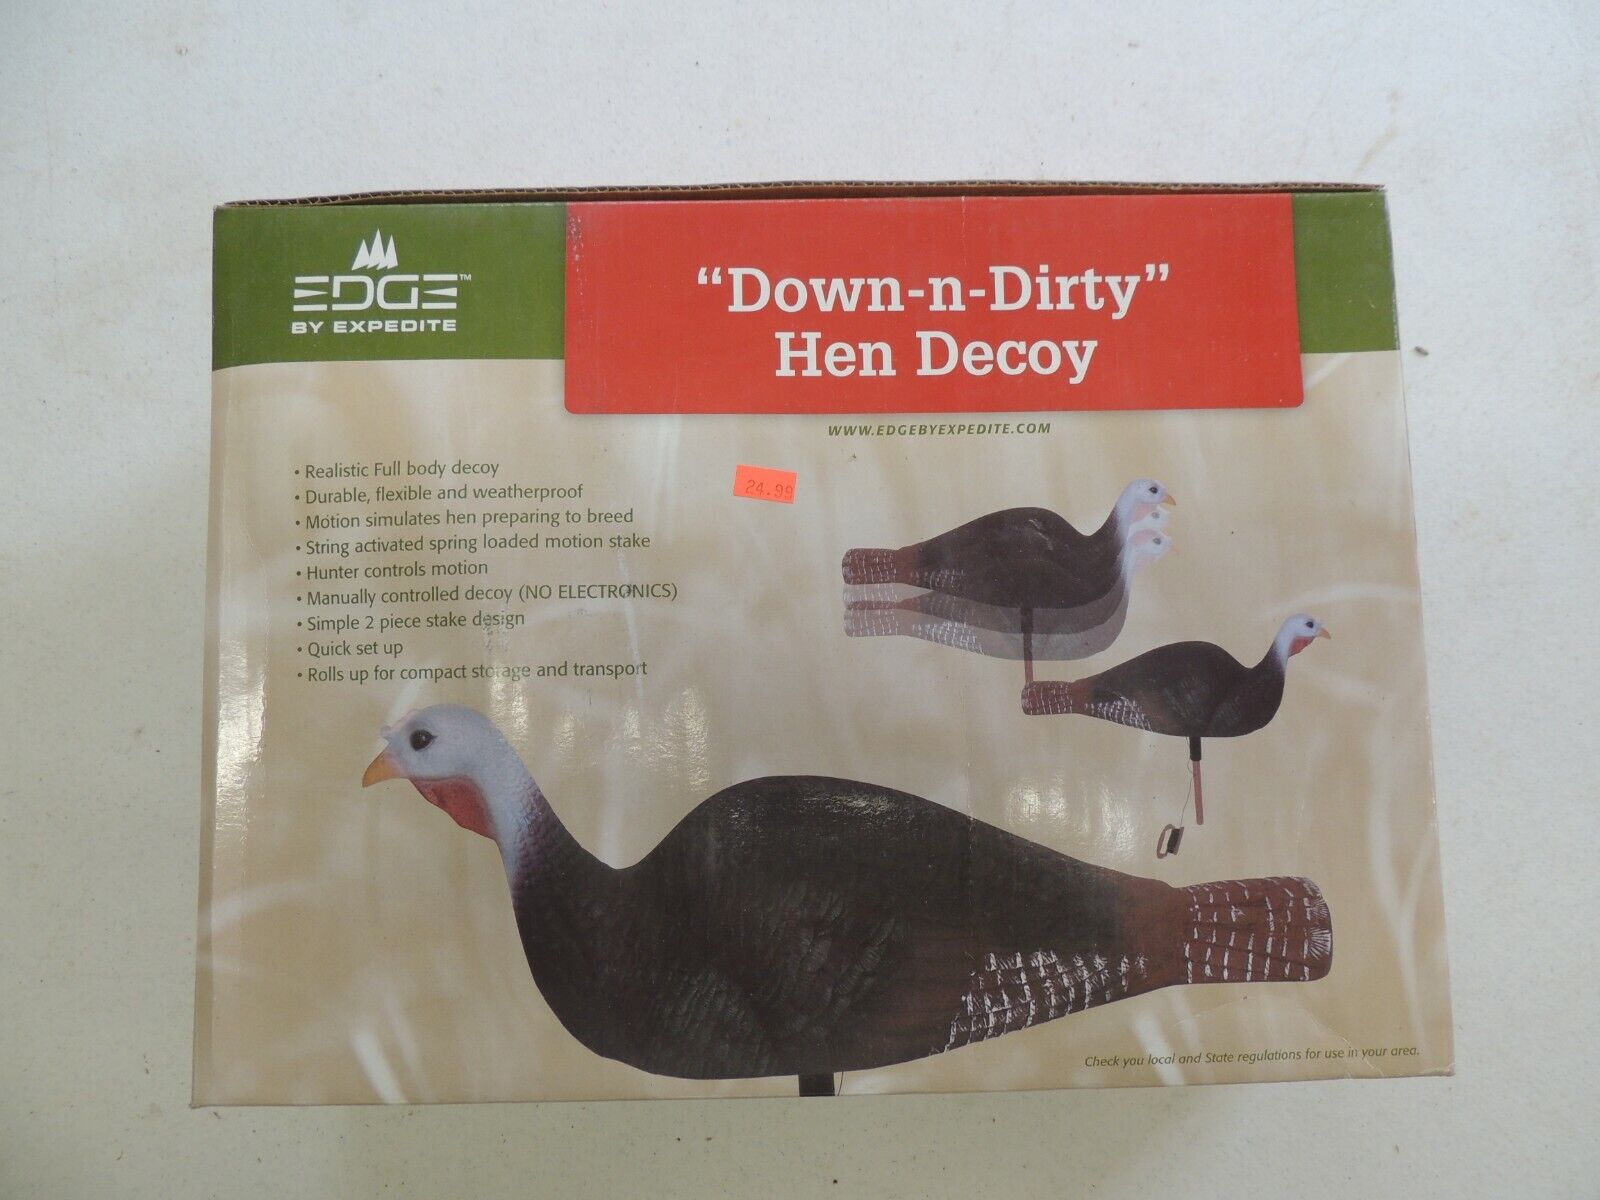 Edge by Expedite Down-n-Dirty Turkey Hen Decoy NEW box shows wear